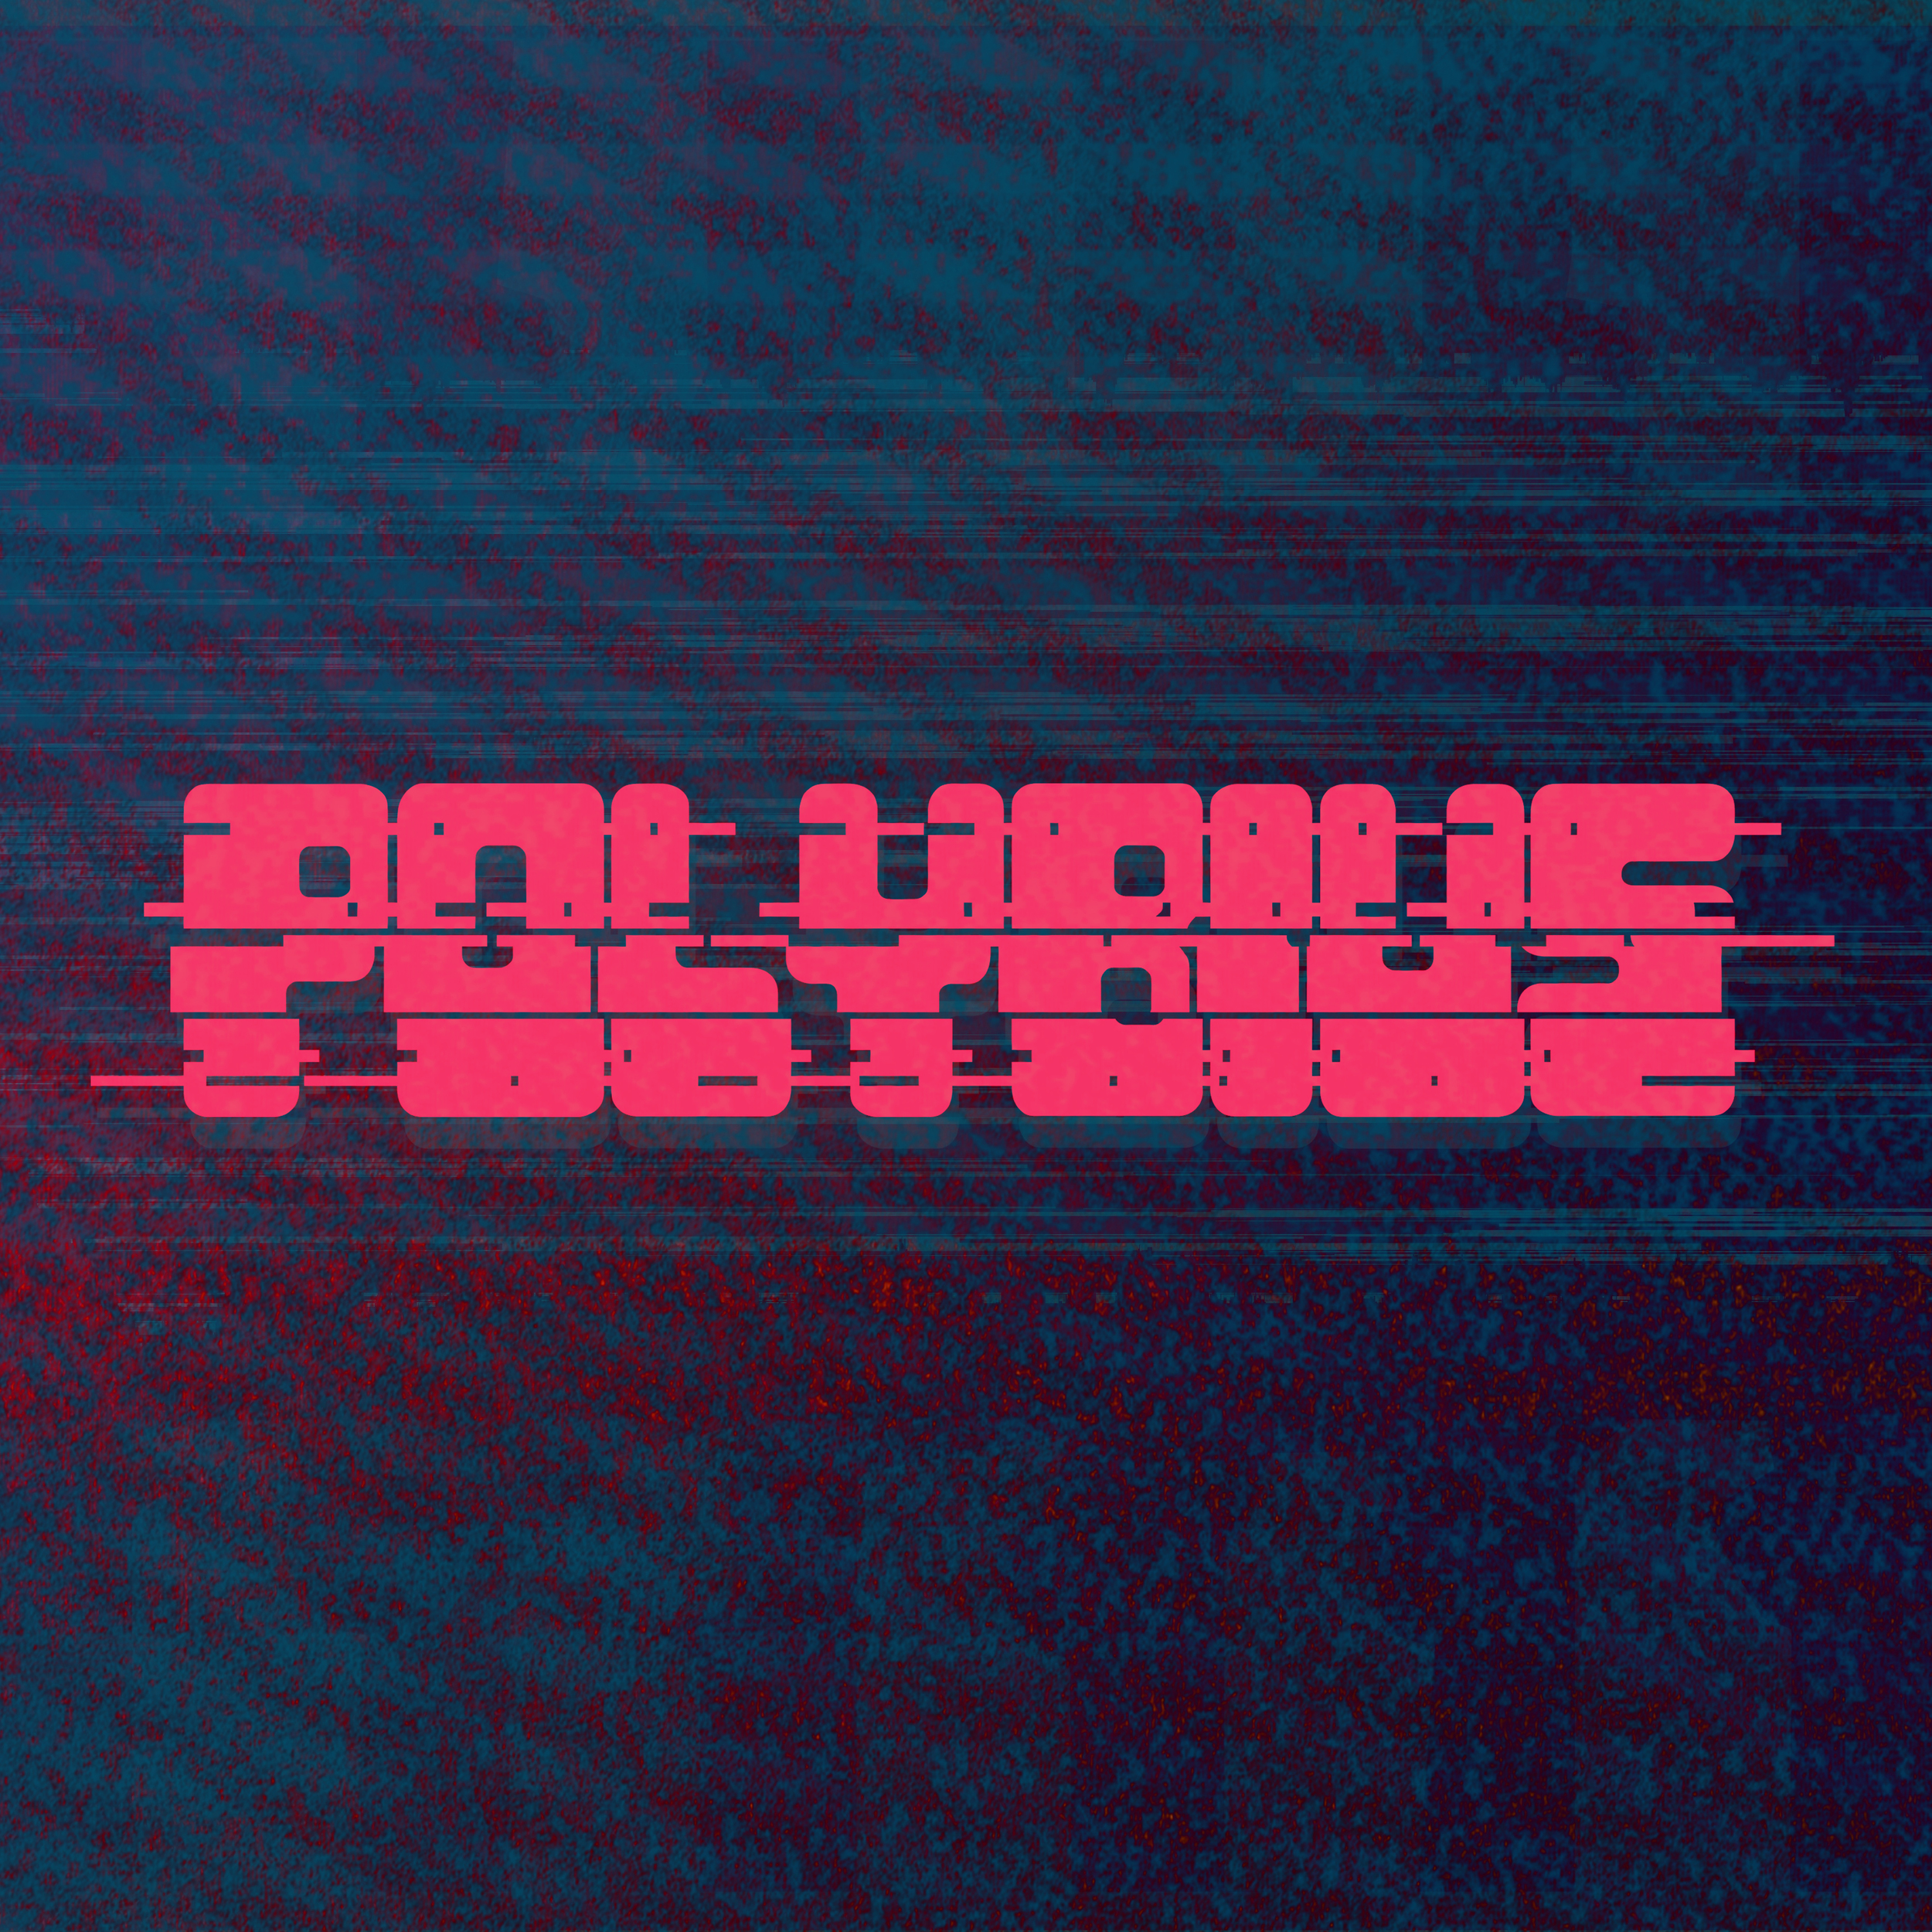 polybius_logo_cover_02.jpg